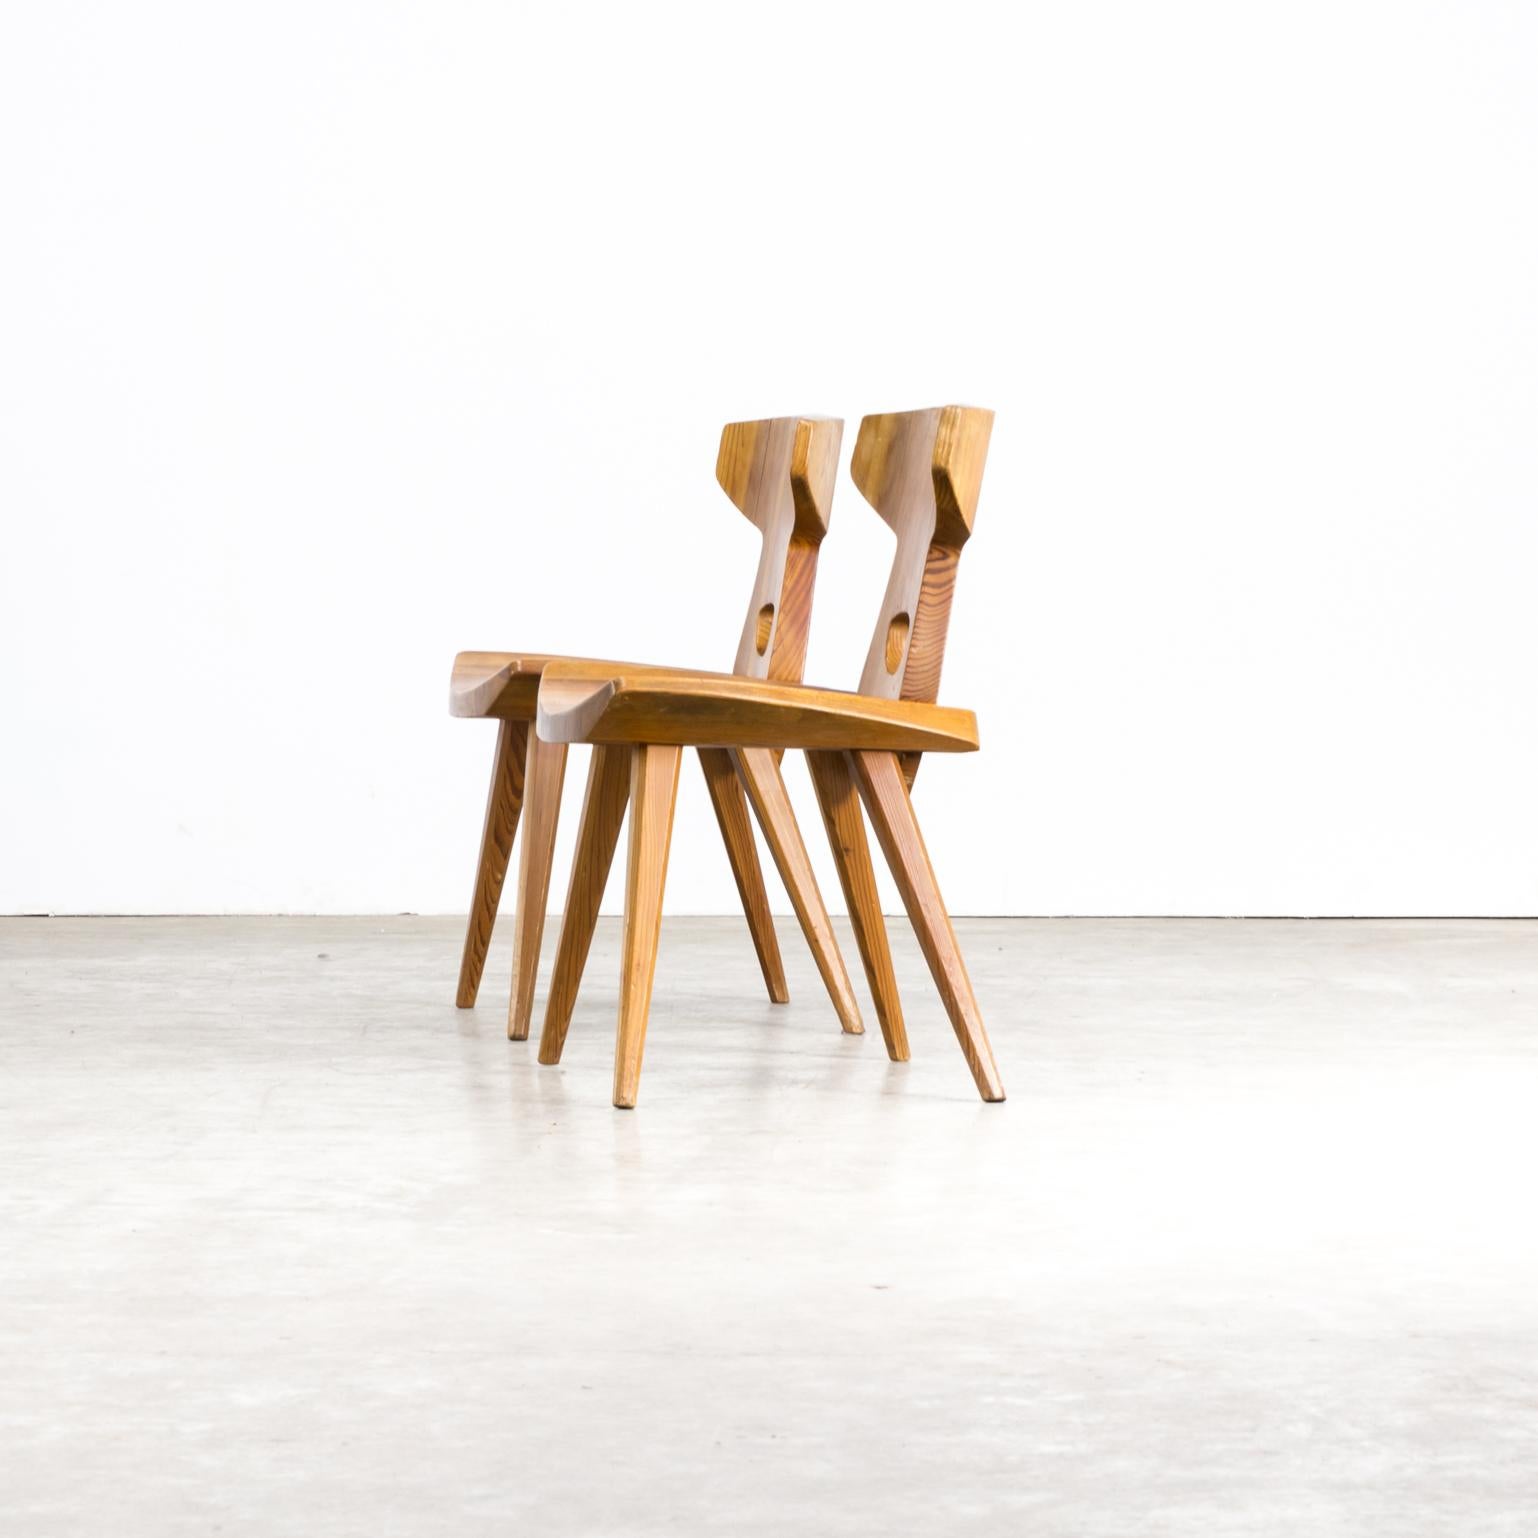 Danish 1960s Jacob Kielland-Brandt Dining Chairs for I. Christiansen Set of 2